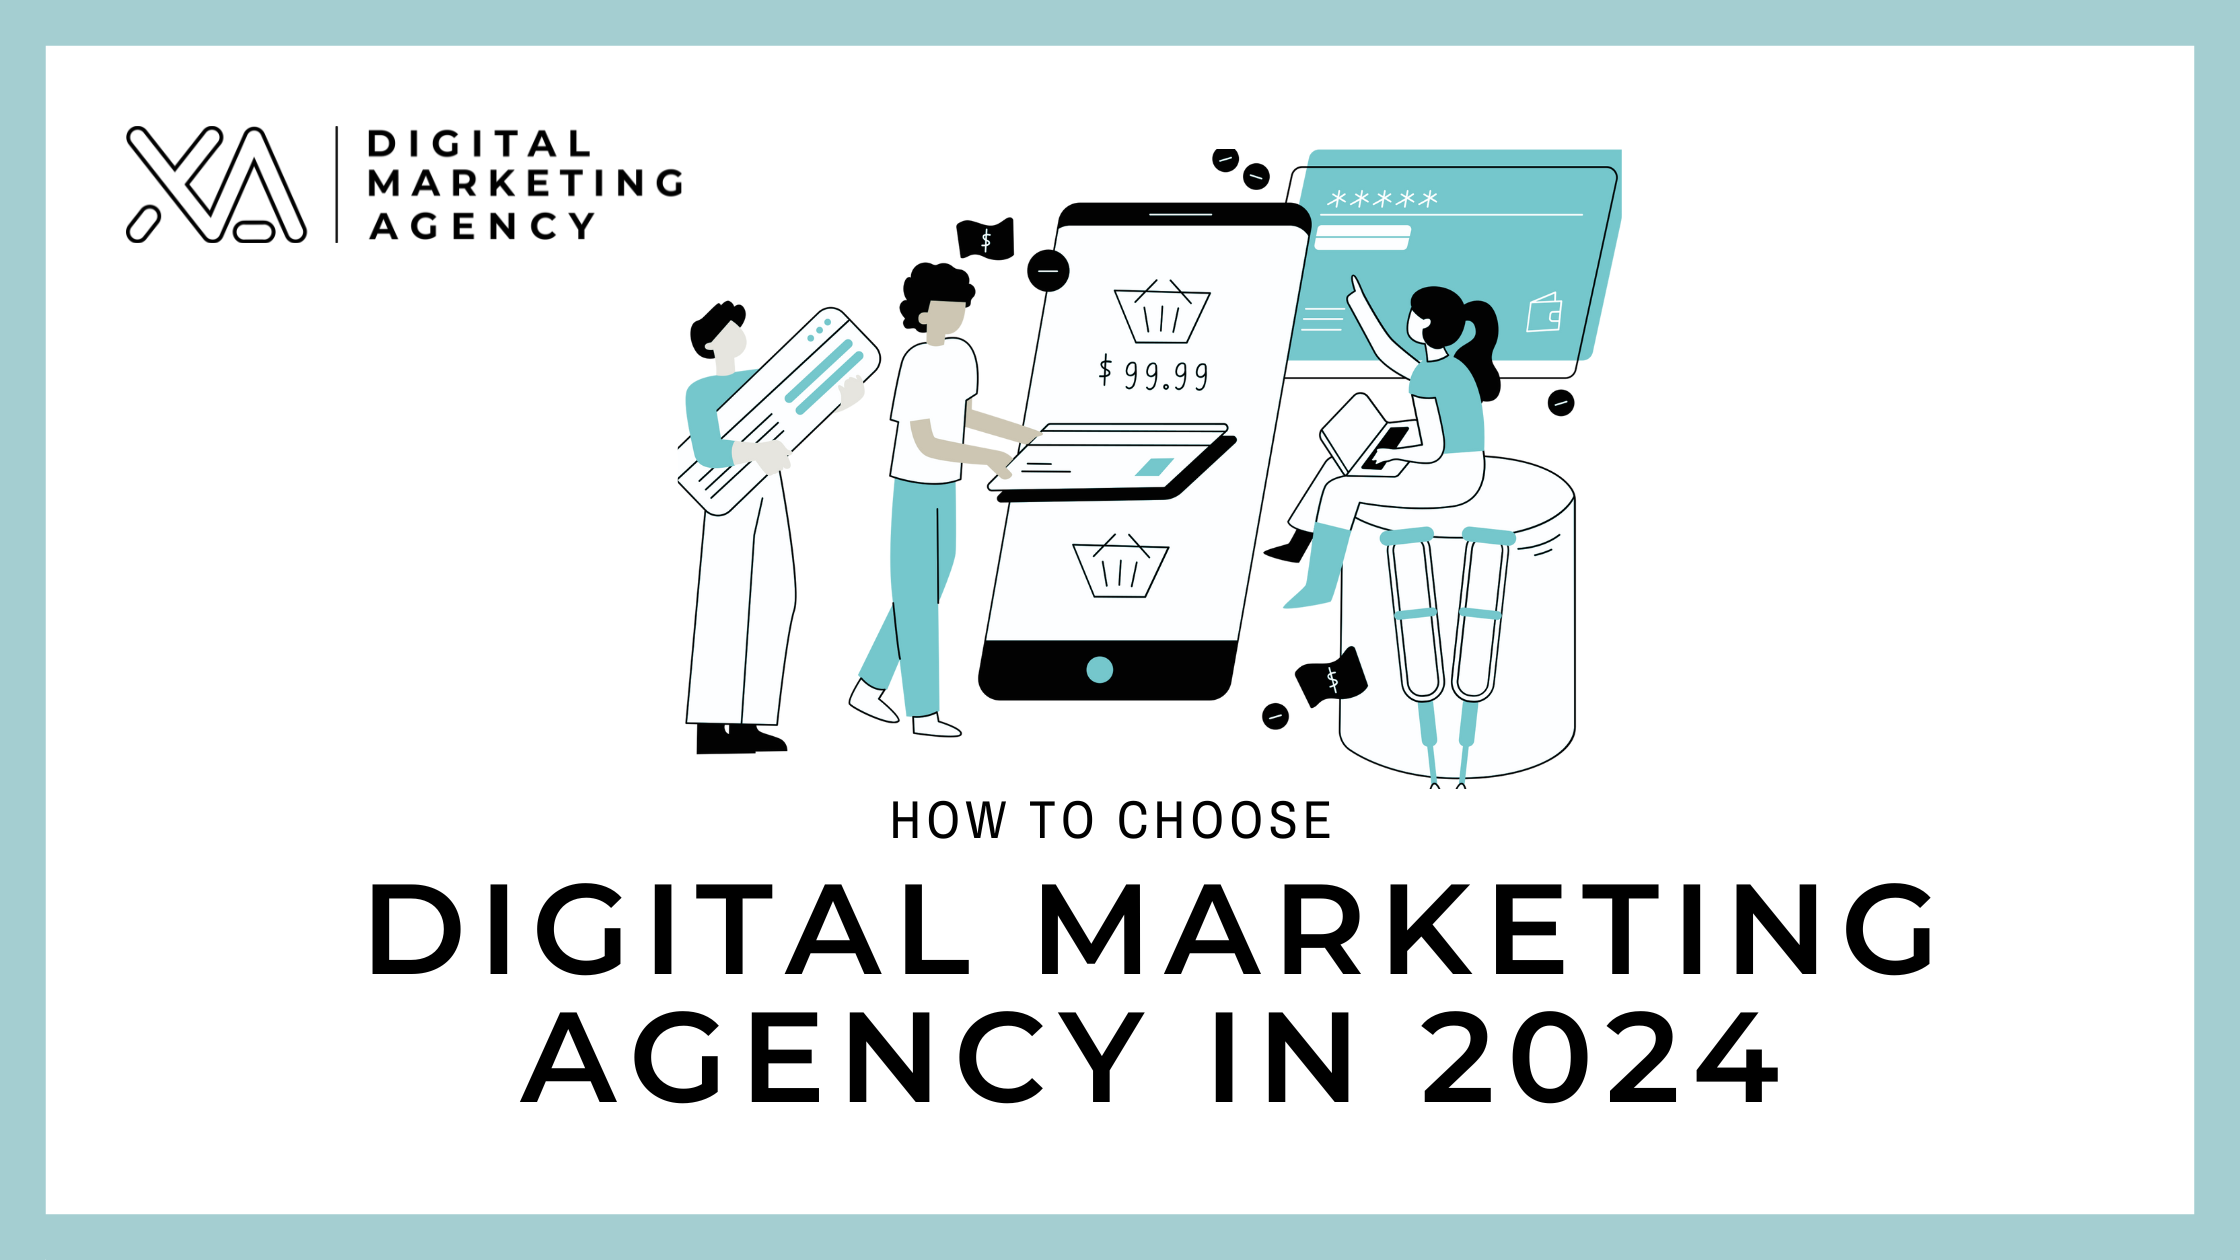 How to choose Digital Marketing Agency in 2024